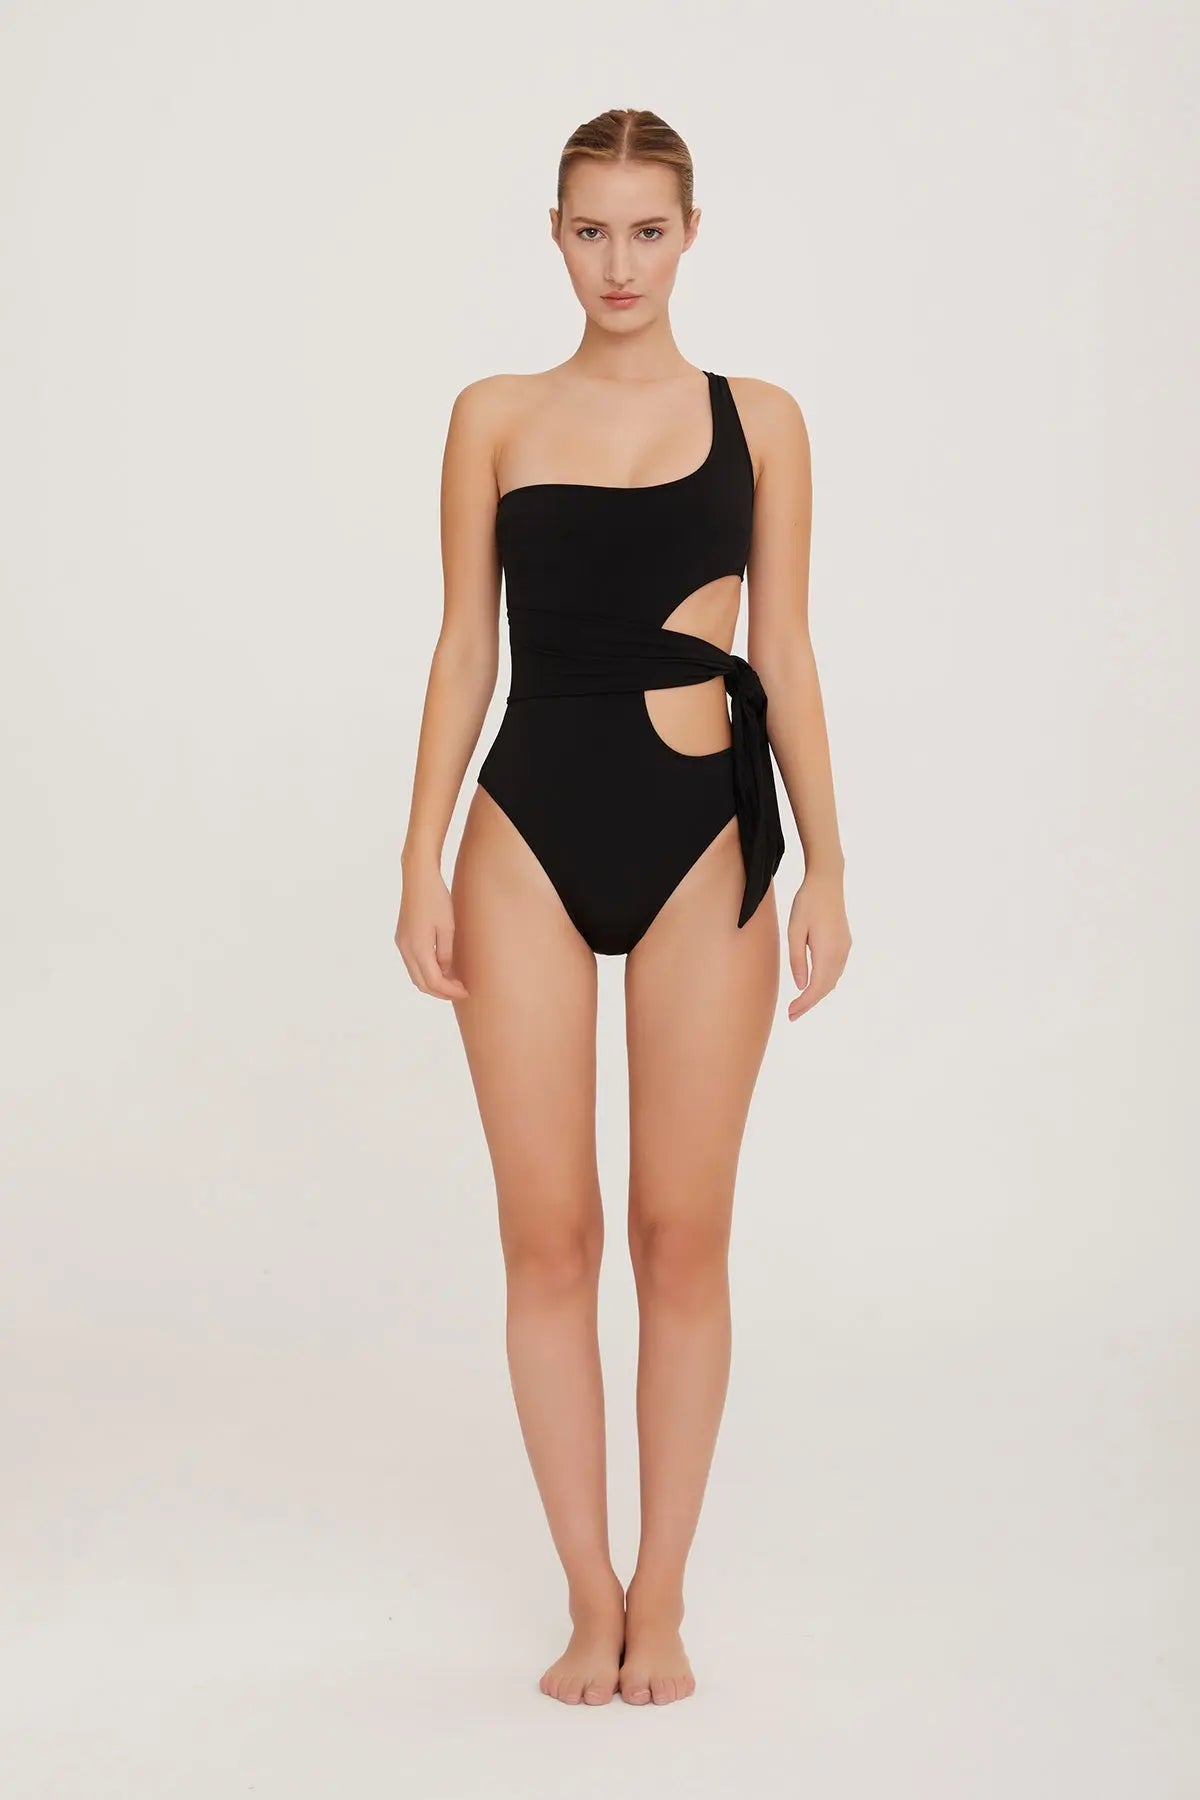 Lapieno Onepiece Swimsuit 3437 Voile Fashion